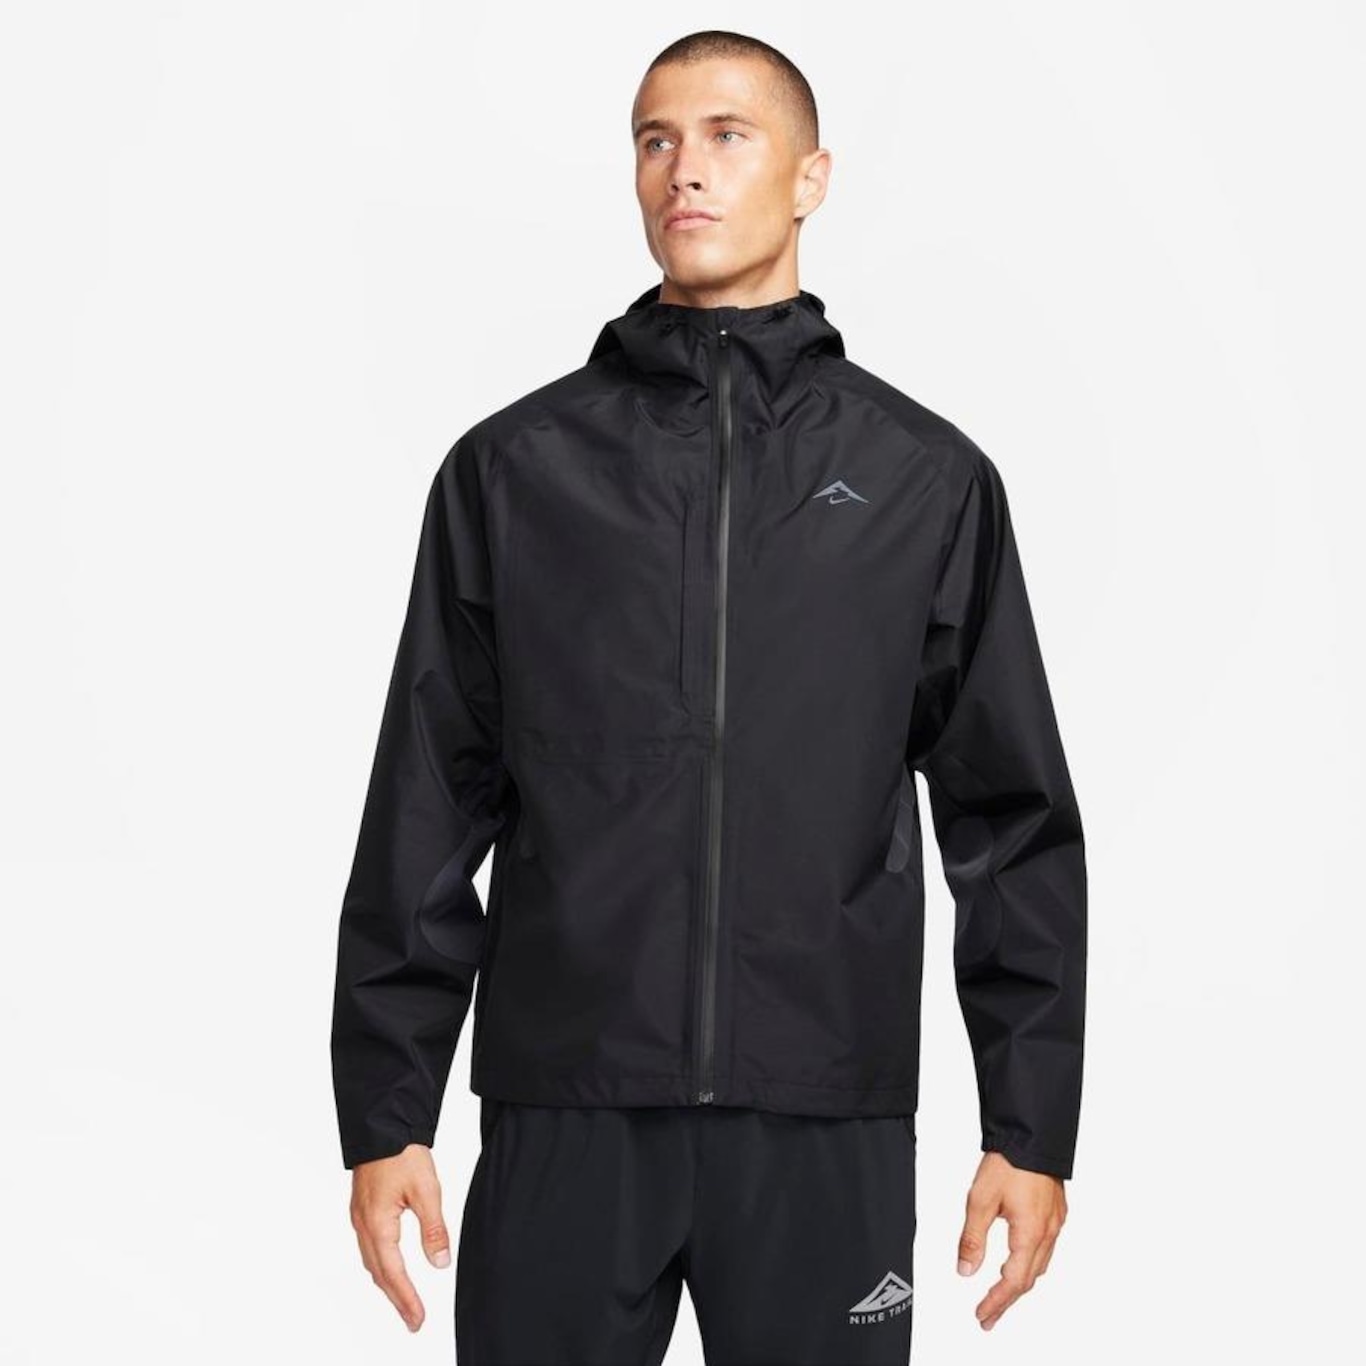 Addos Men's Lycra Sports Jacket